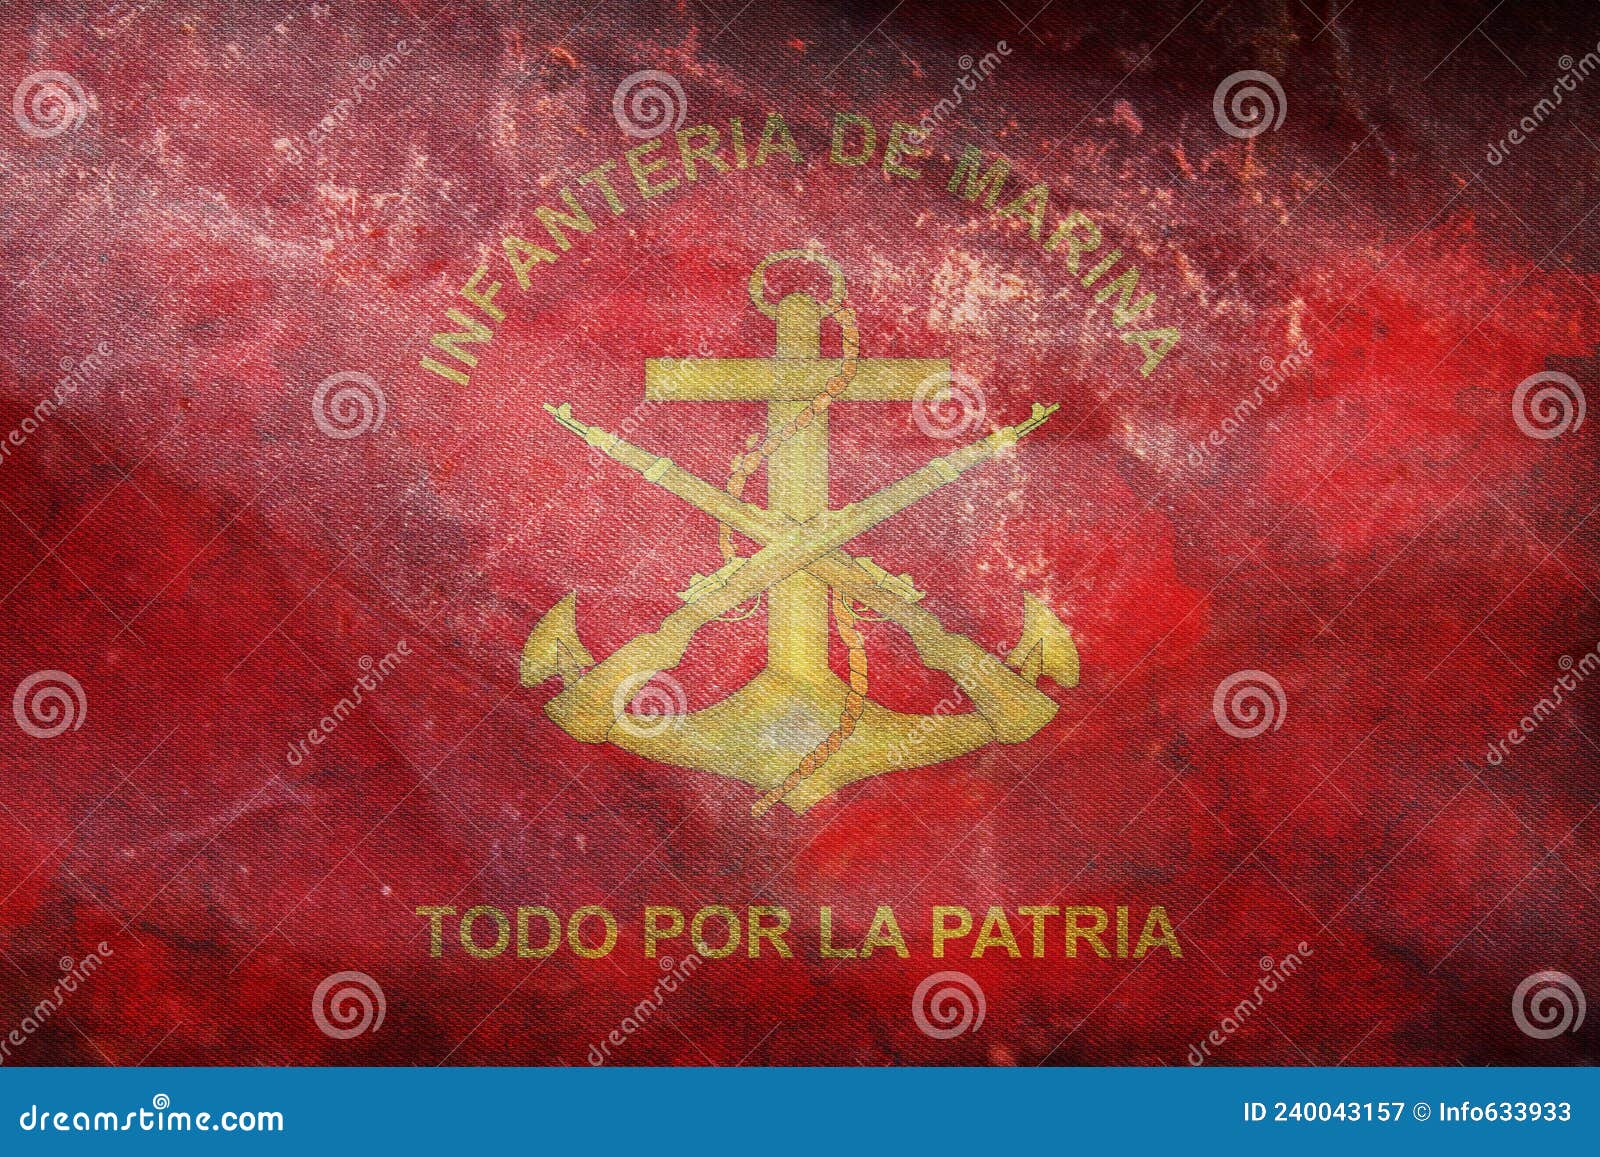 top view of flag estandarte infanteria de marina, mexico. retro flag with grunge texture. united mexican states patriot and travel